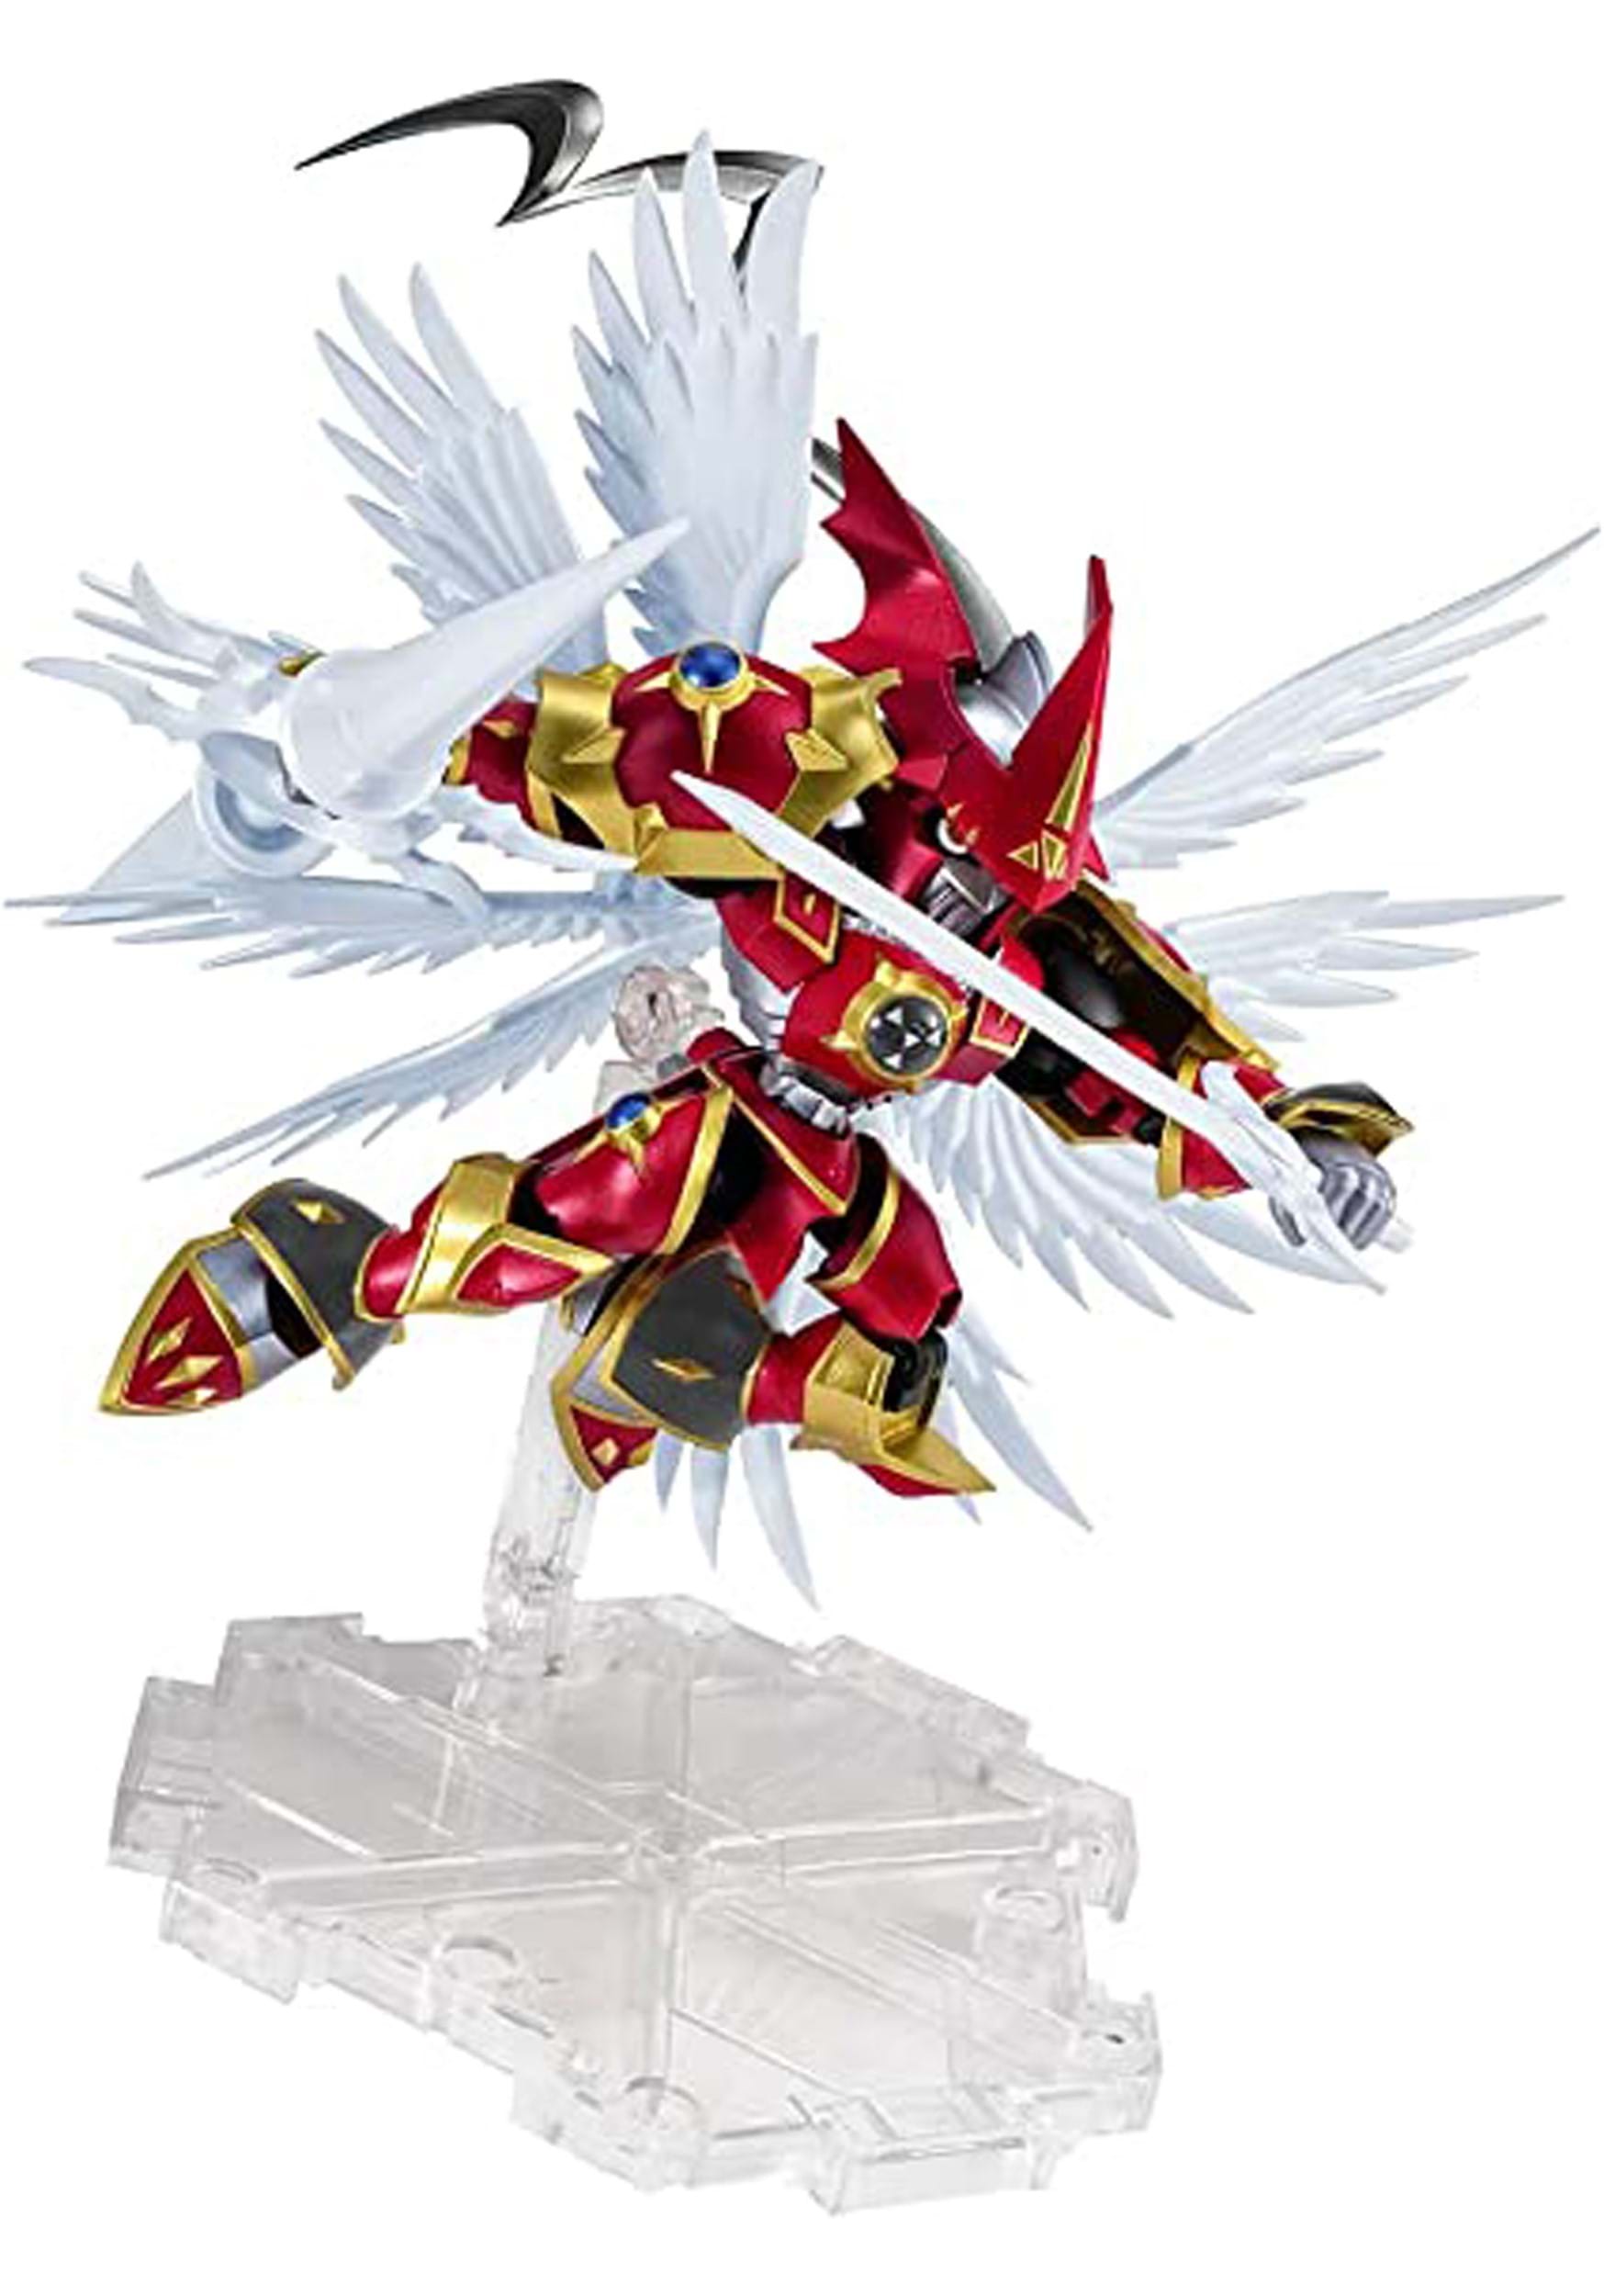 Bandai Spirits Digimon Tamers Dukemon/Gallantmon Crimson Figure